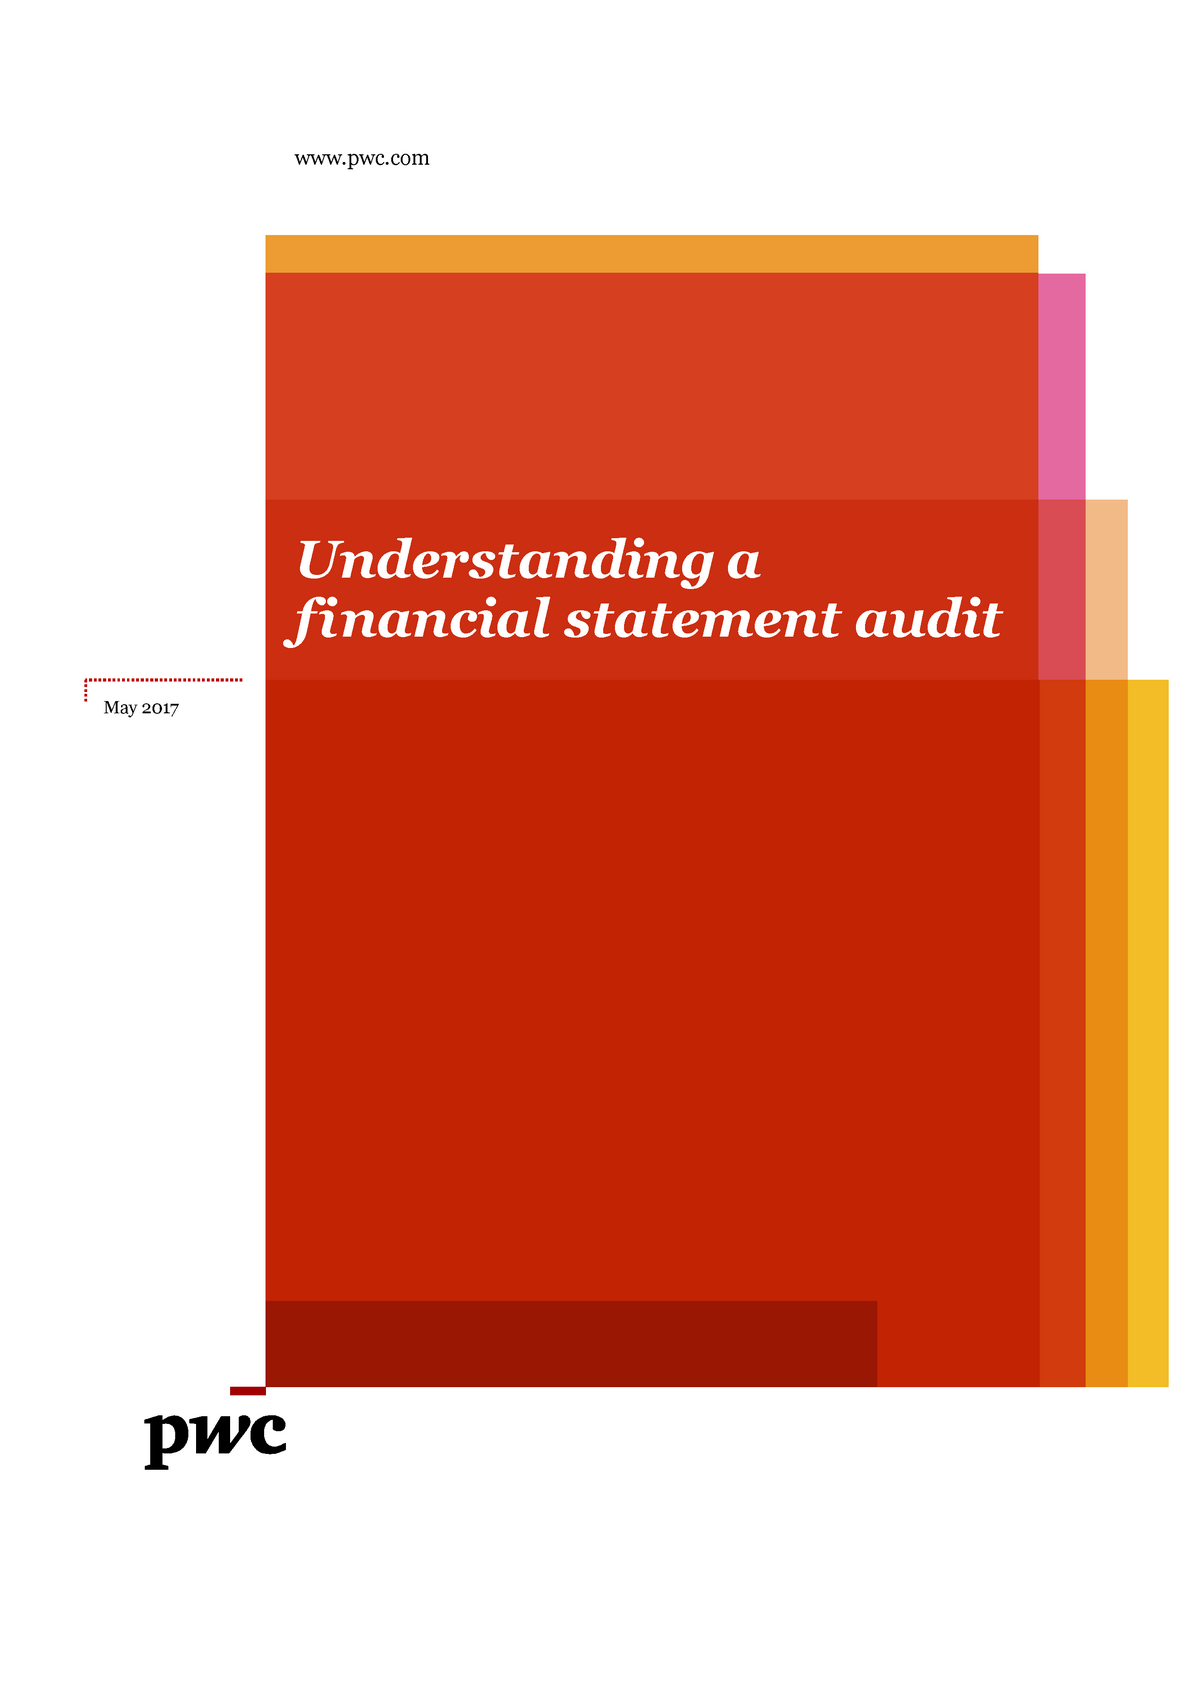 pwc financial statement presentation guide 2022